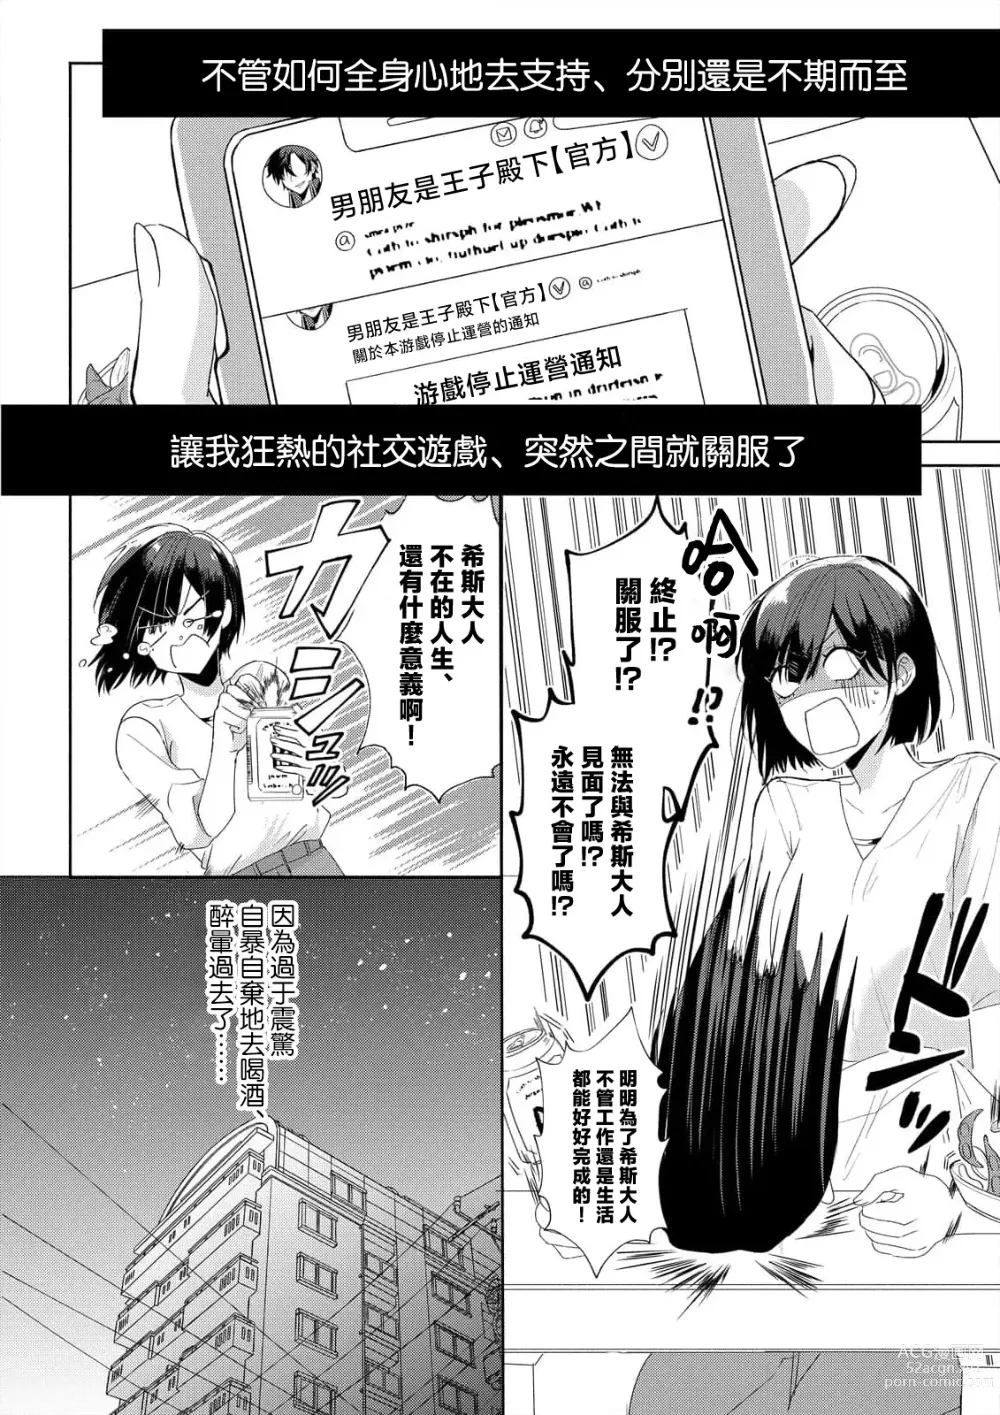 Page 4 of manga 「現在開始要擁你入懷了喲」~轉生後的惡役千金（我）和本命色色什麼的~ 1-4